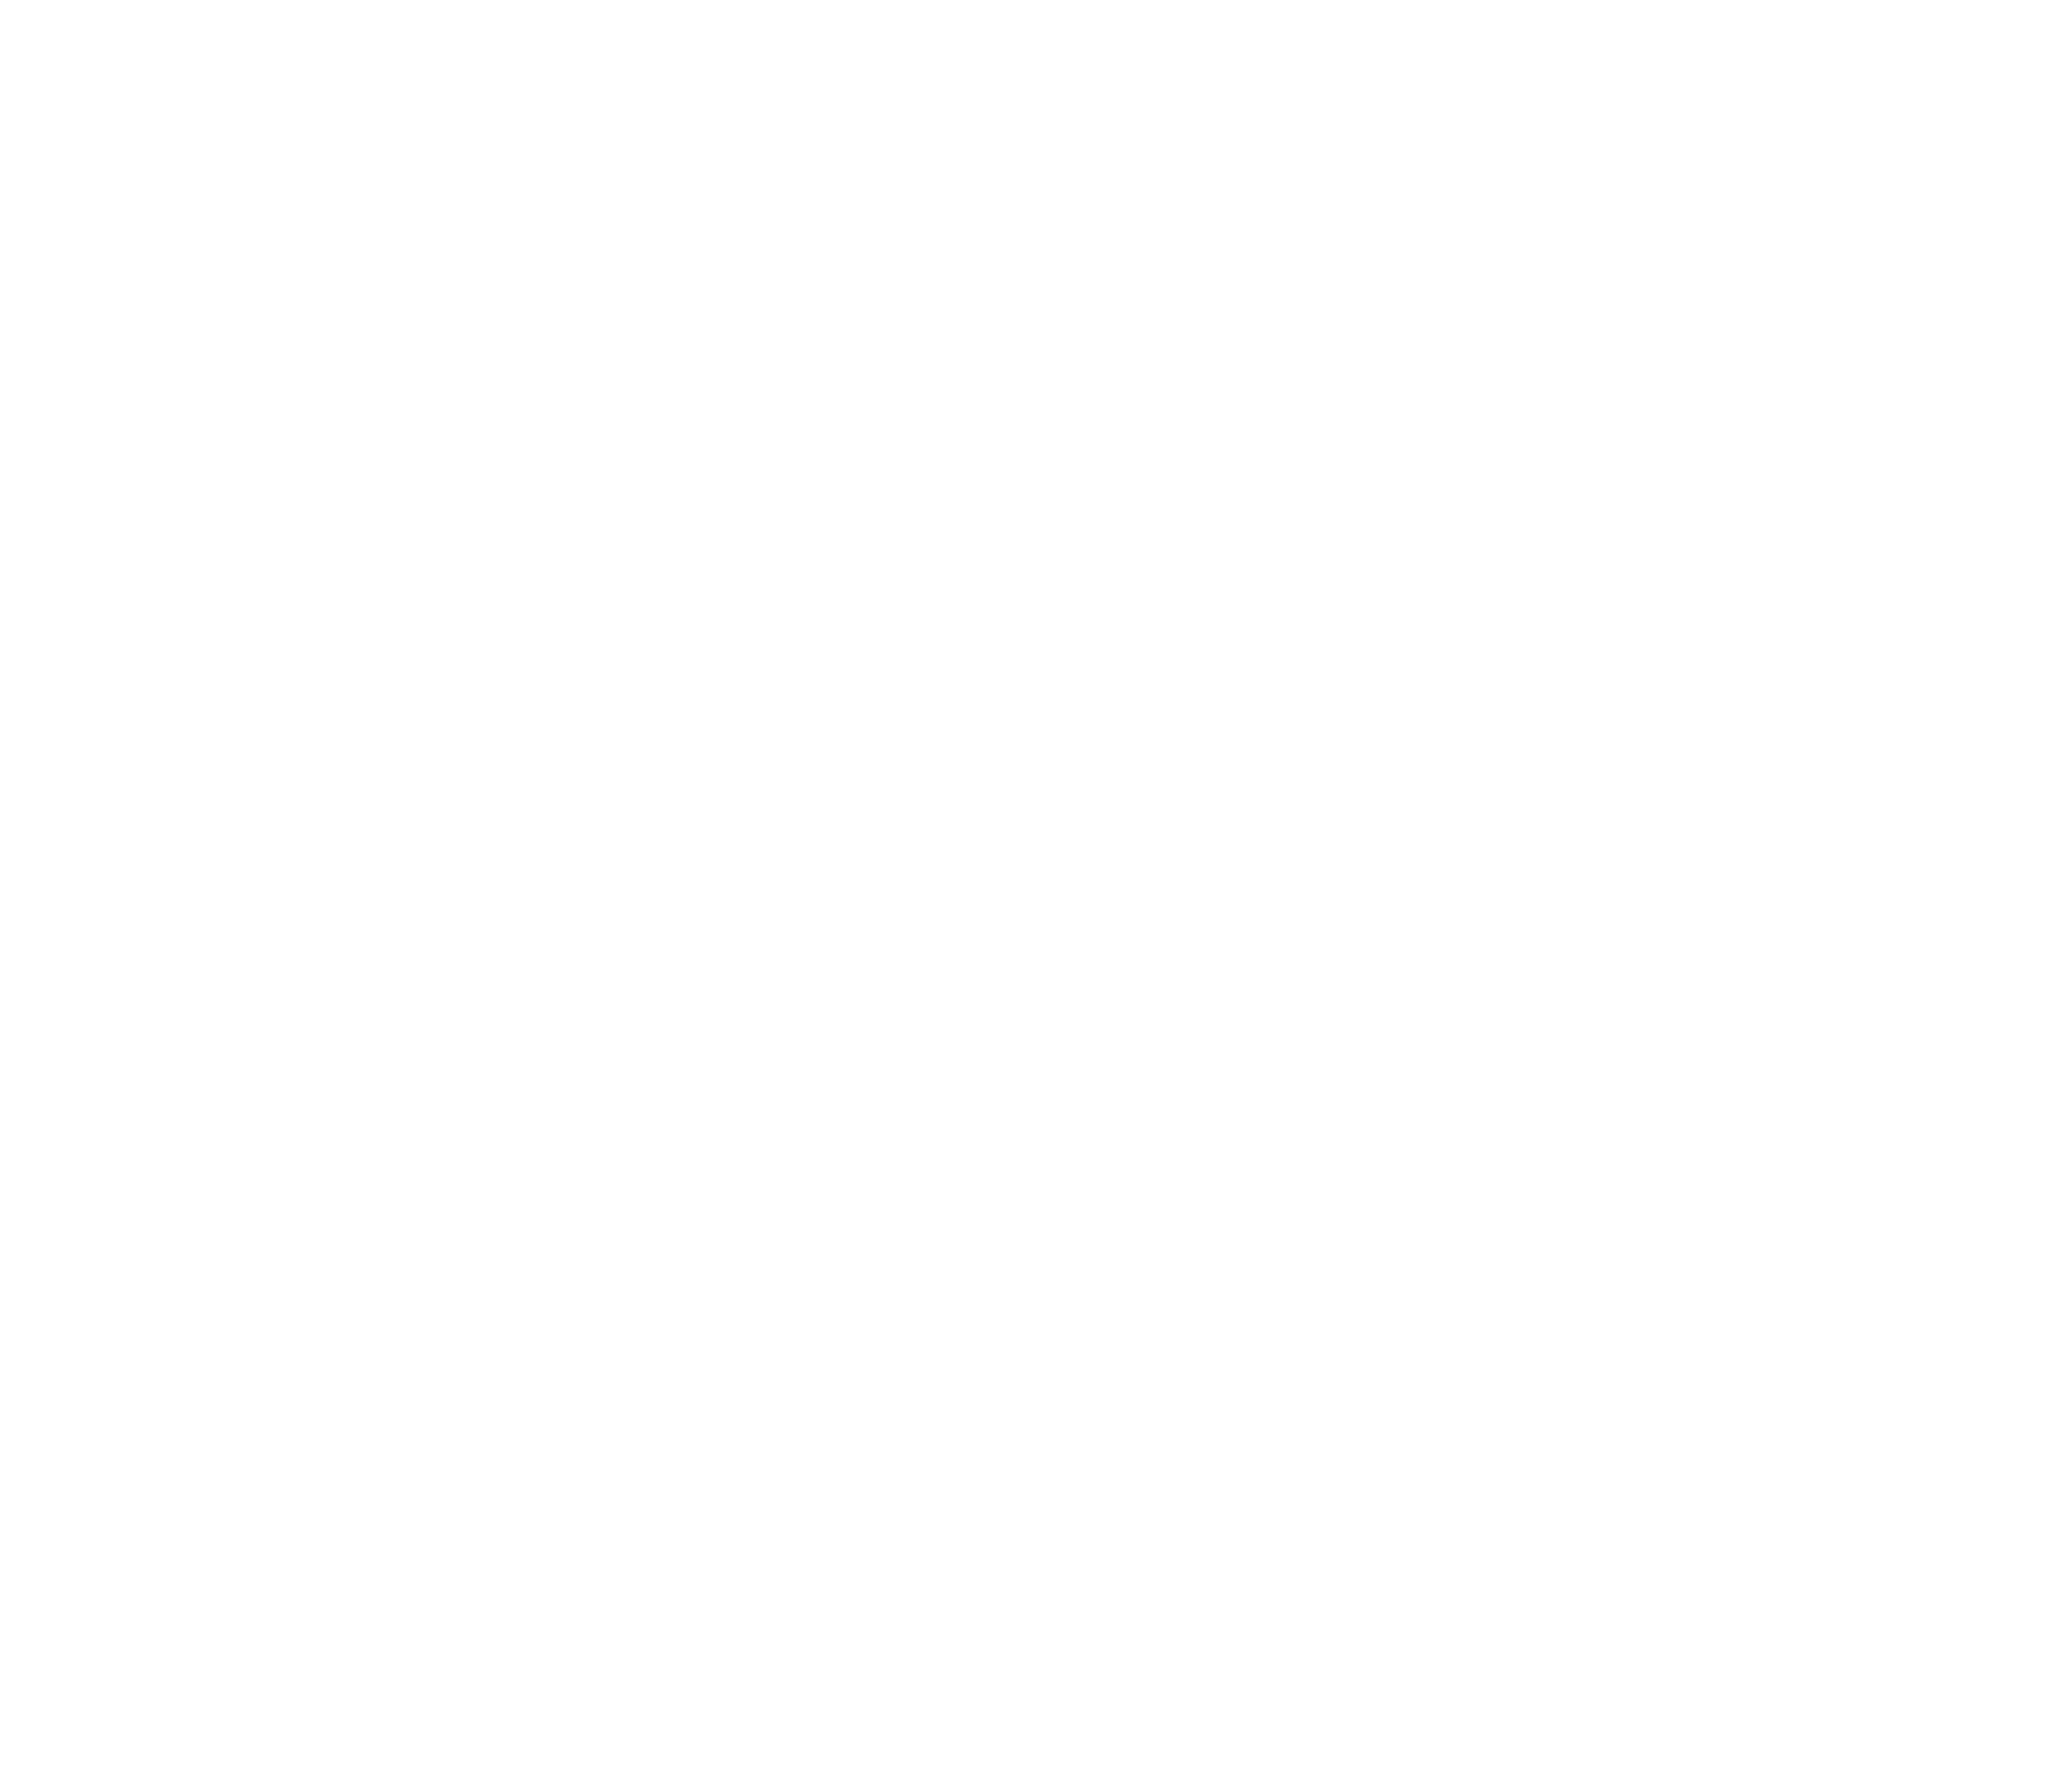 http://www.reslogproject.org/en/wp-content/uploads/2022/08/leb2-01.png